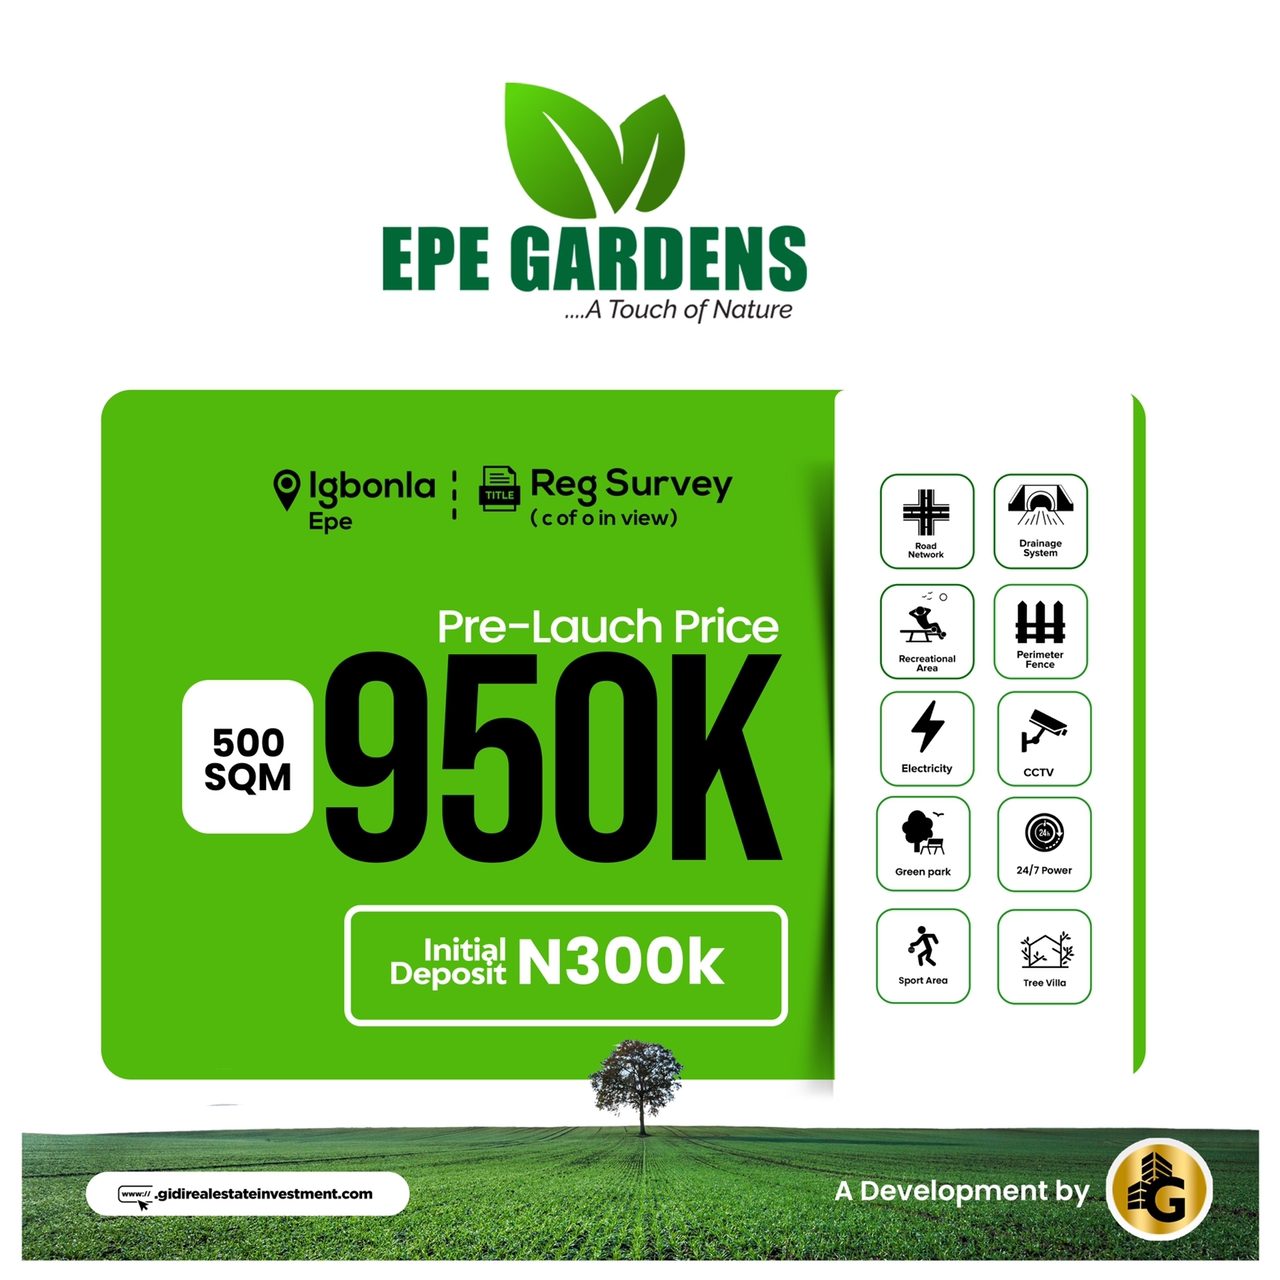 Epe Gardens Estate. Residential estate in Lagos